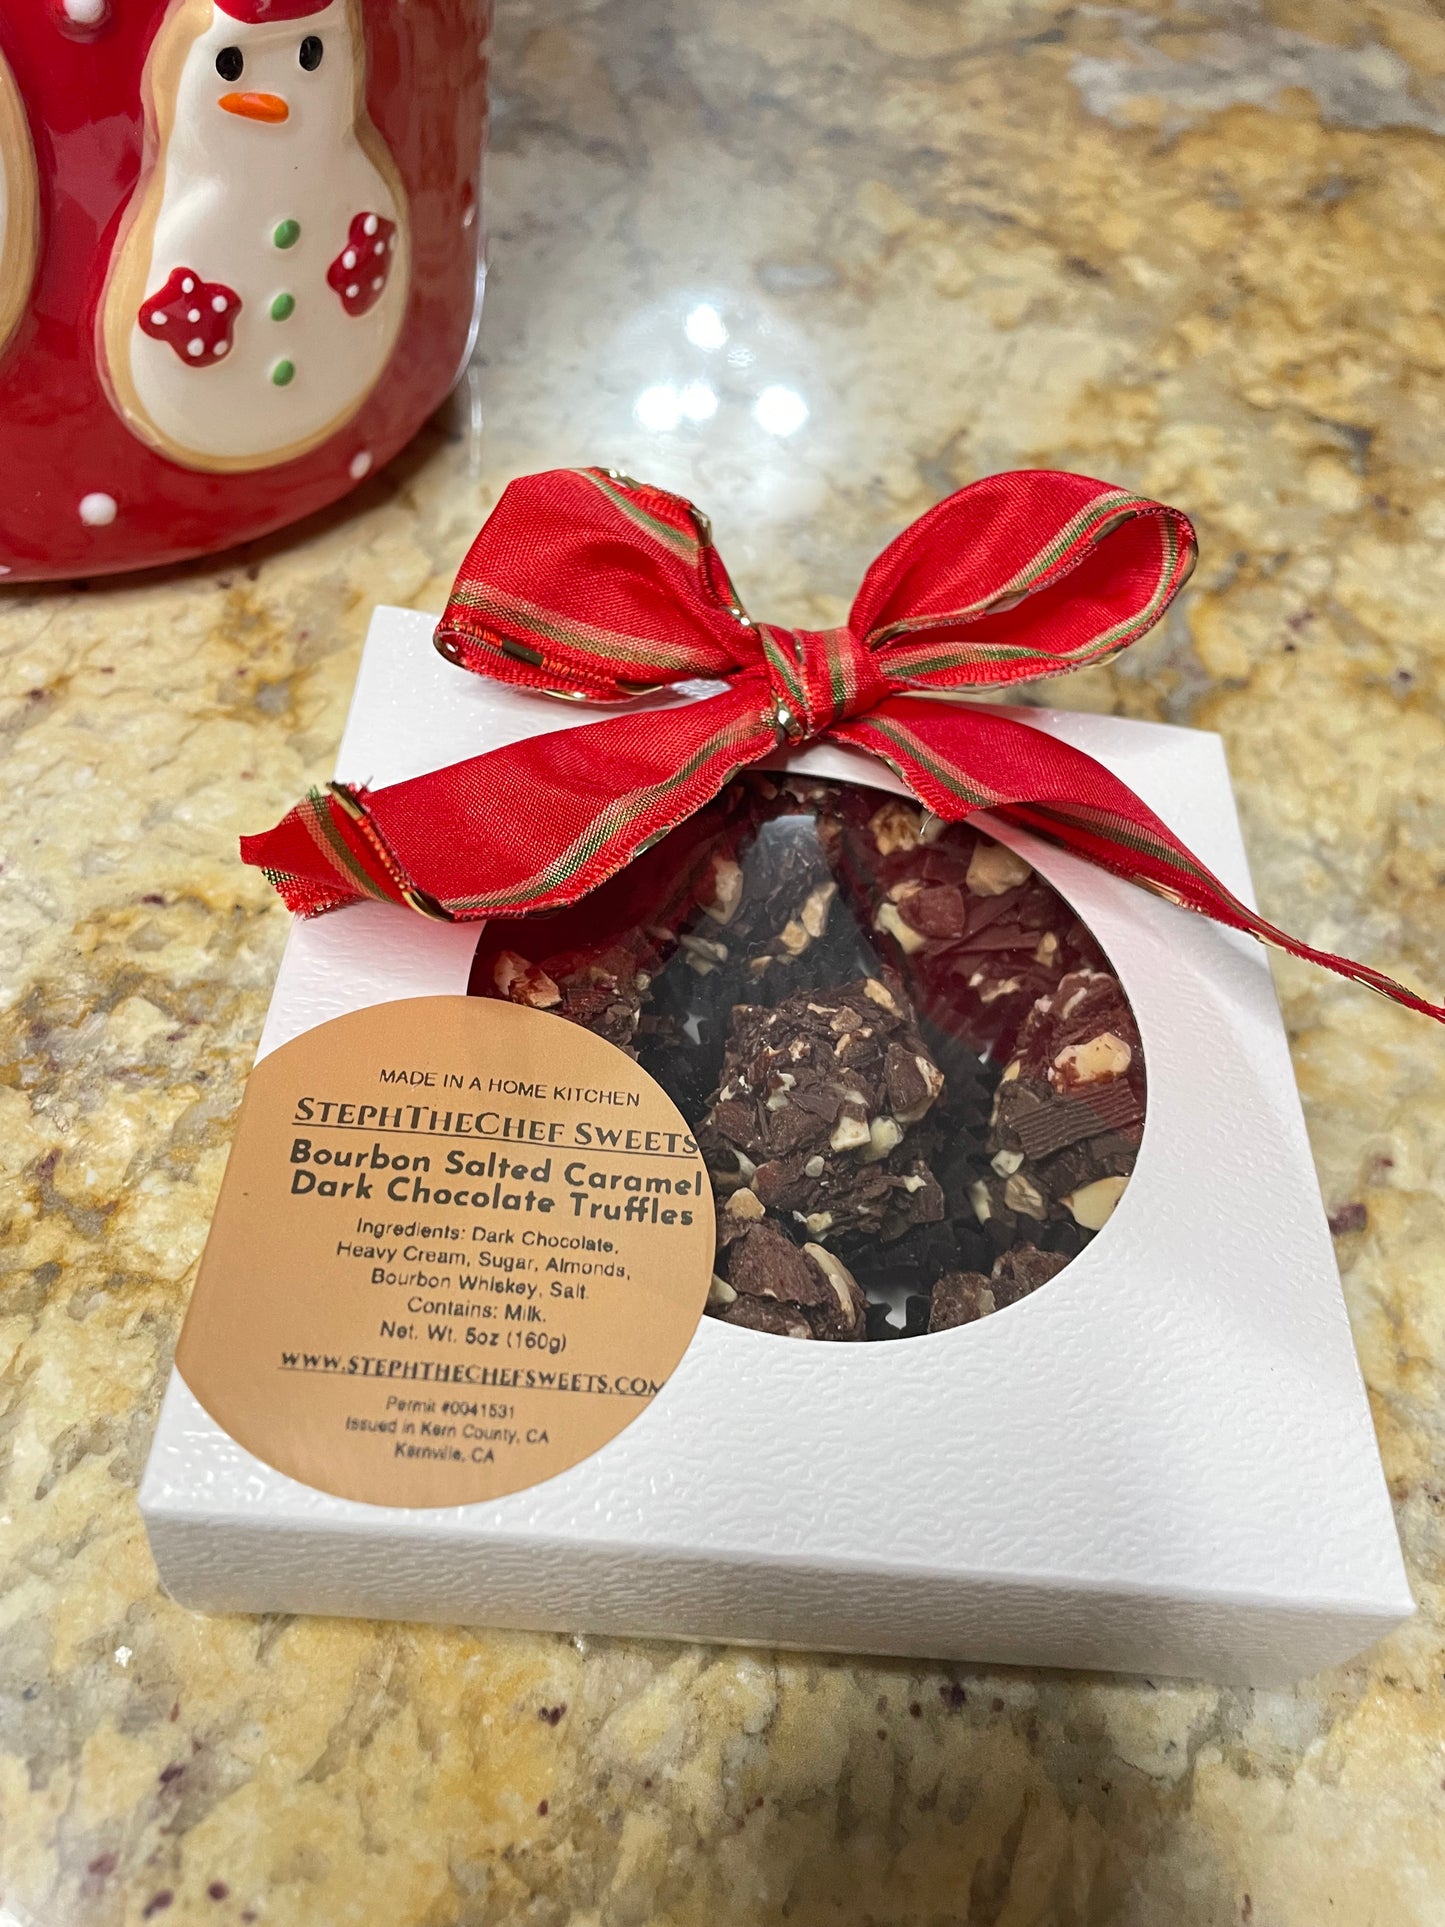 Truffle Box - Caramel, Dark Chocolate, Almond